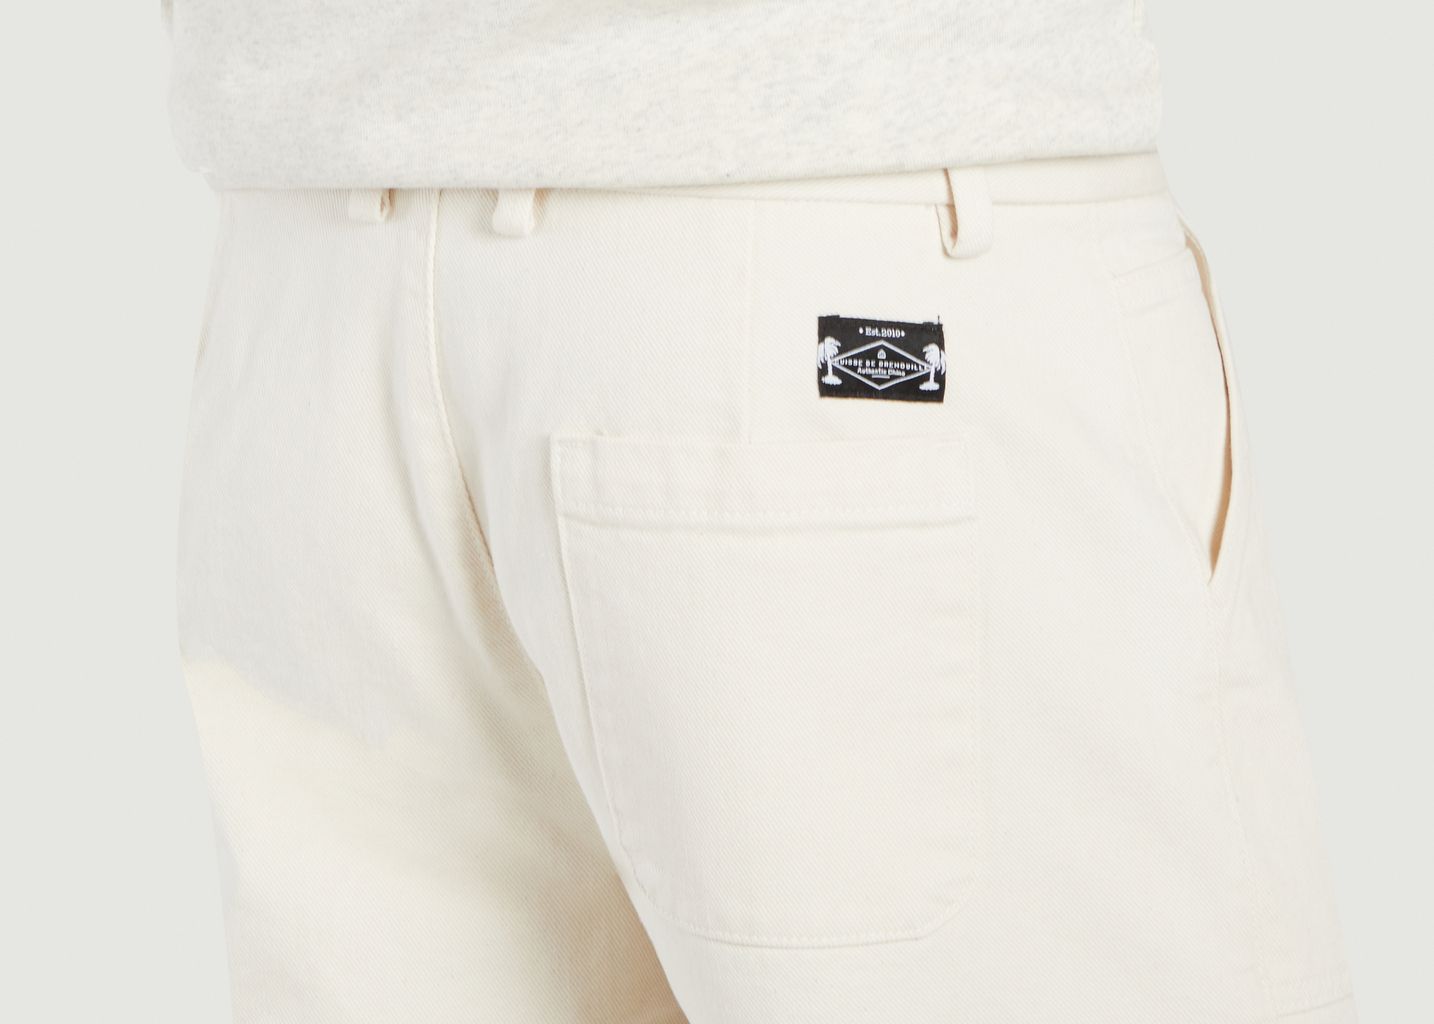 Chino Pocket Pants - Cuisse de Grenouille